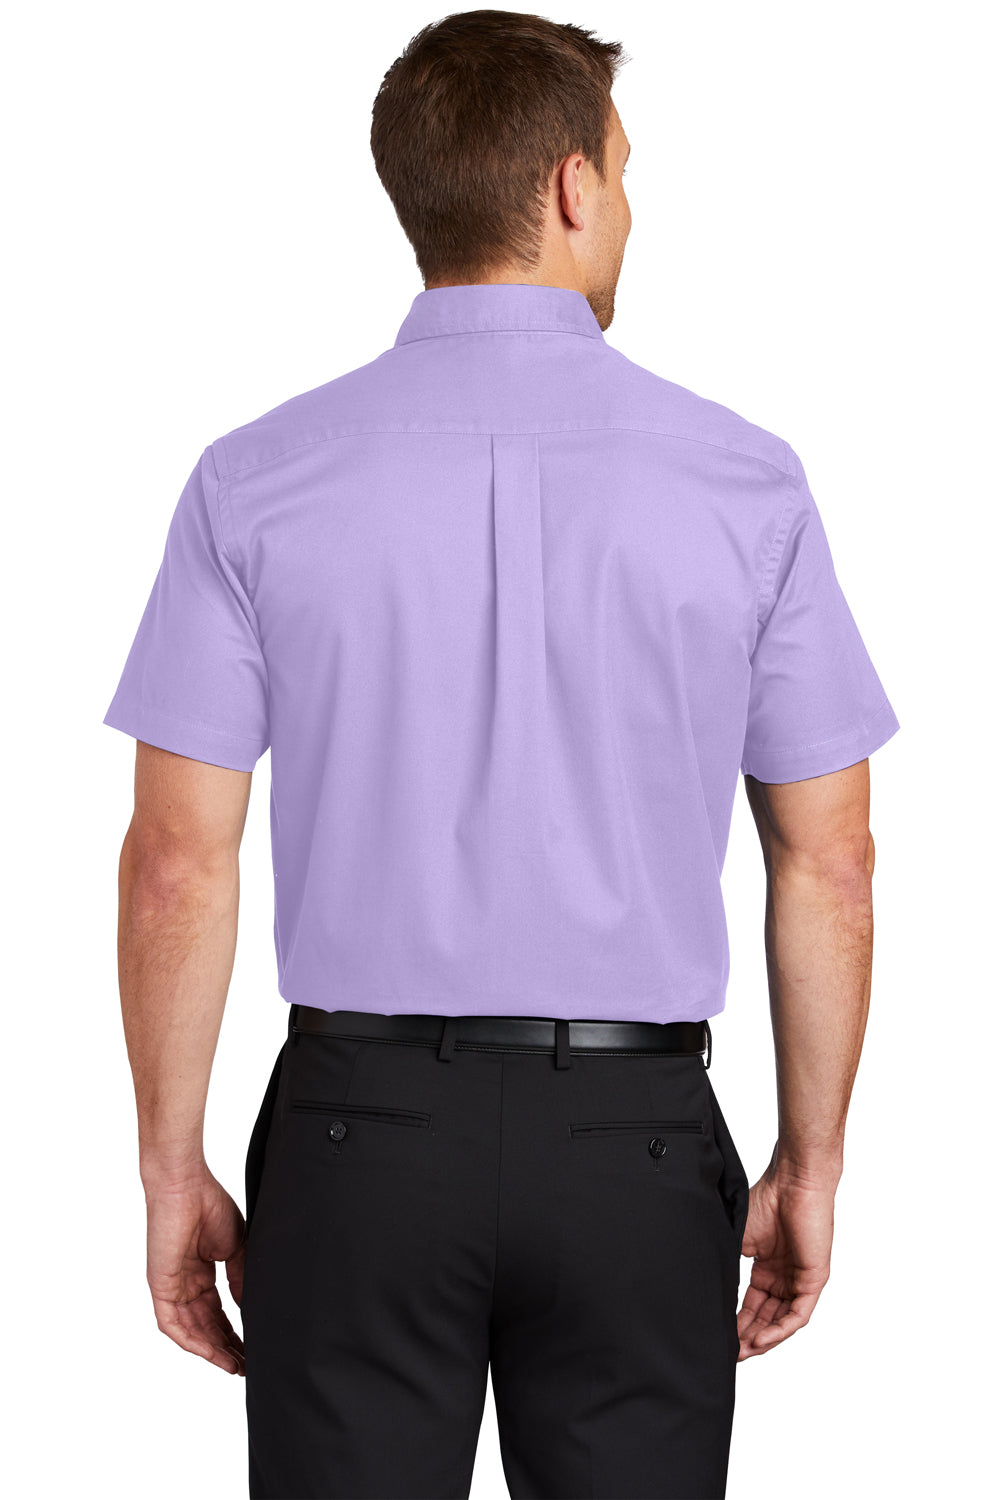 Port Authority S508/TLS508 Mens Easy Care Wrinkle Resistant Short Sleeve Button Down Shirt w/ Pocket Bright Lavender Purple Back